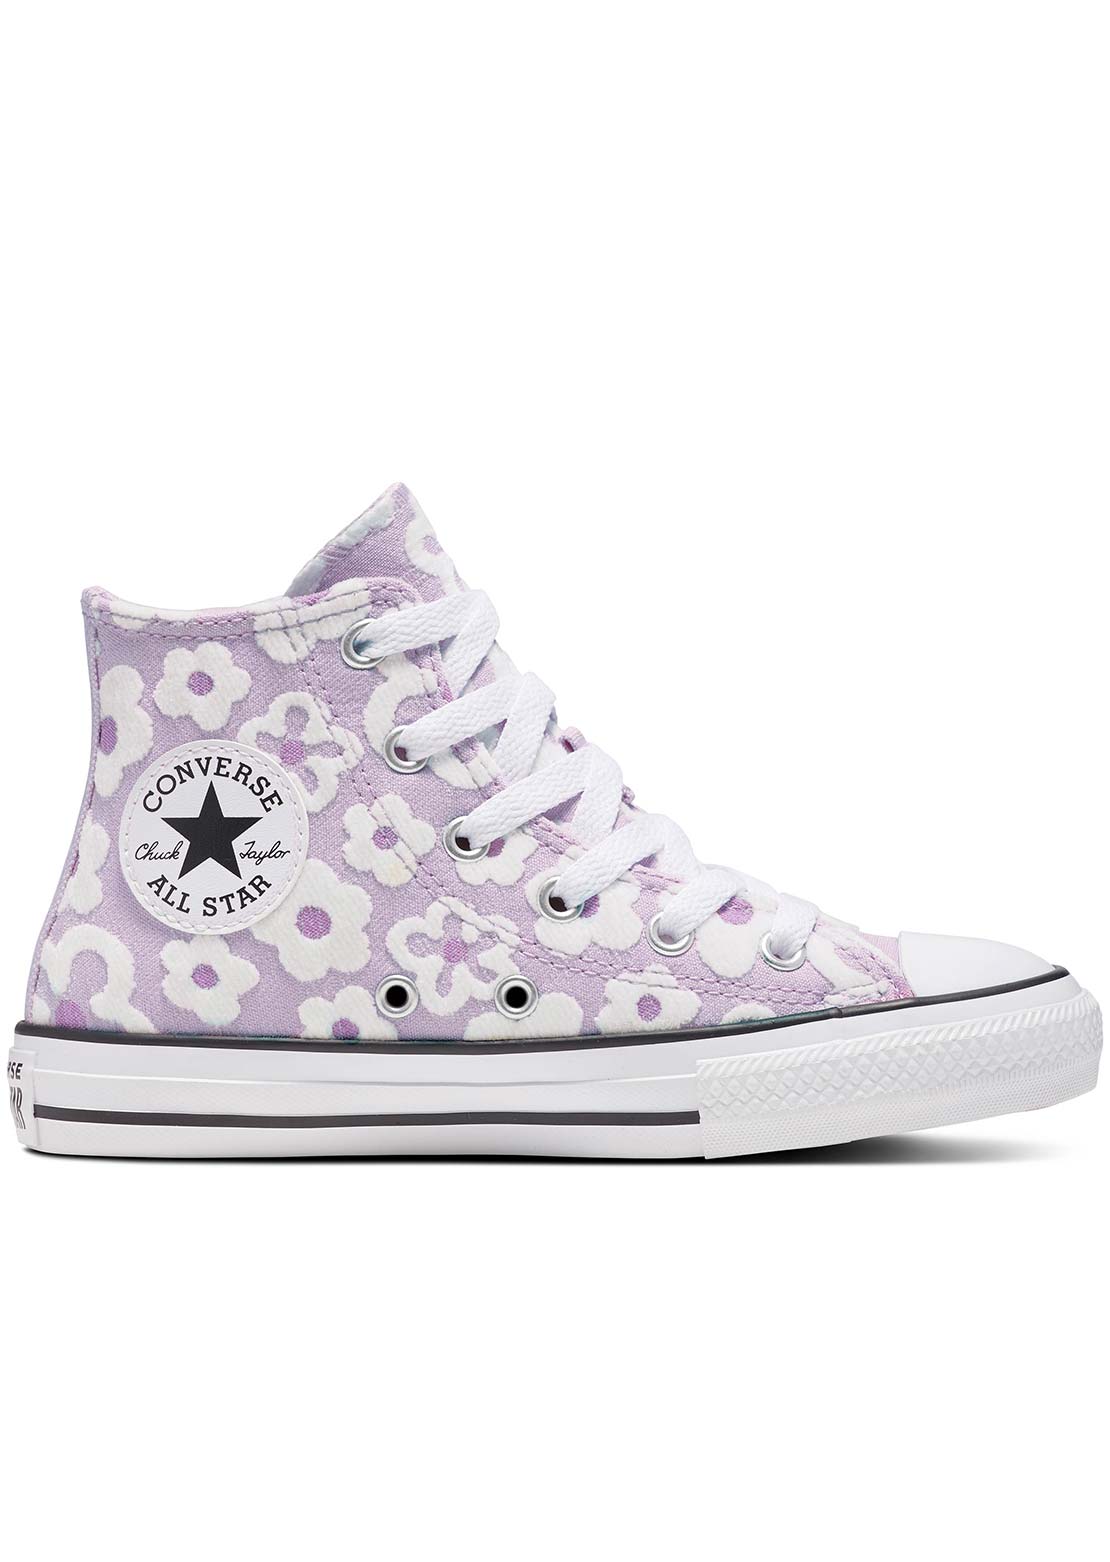 Converse Junior Chuck Taylor All Star High Top Shoes Stardust Lilac/Grape Fizz